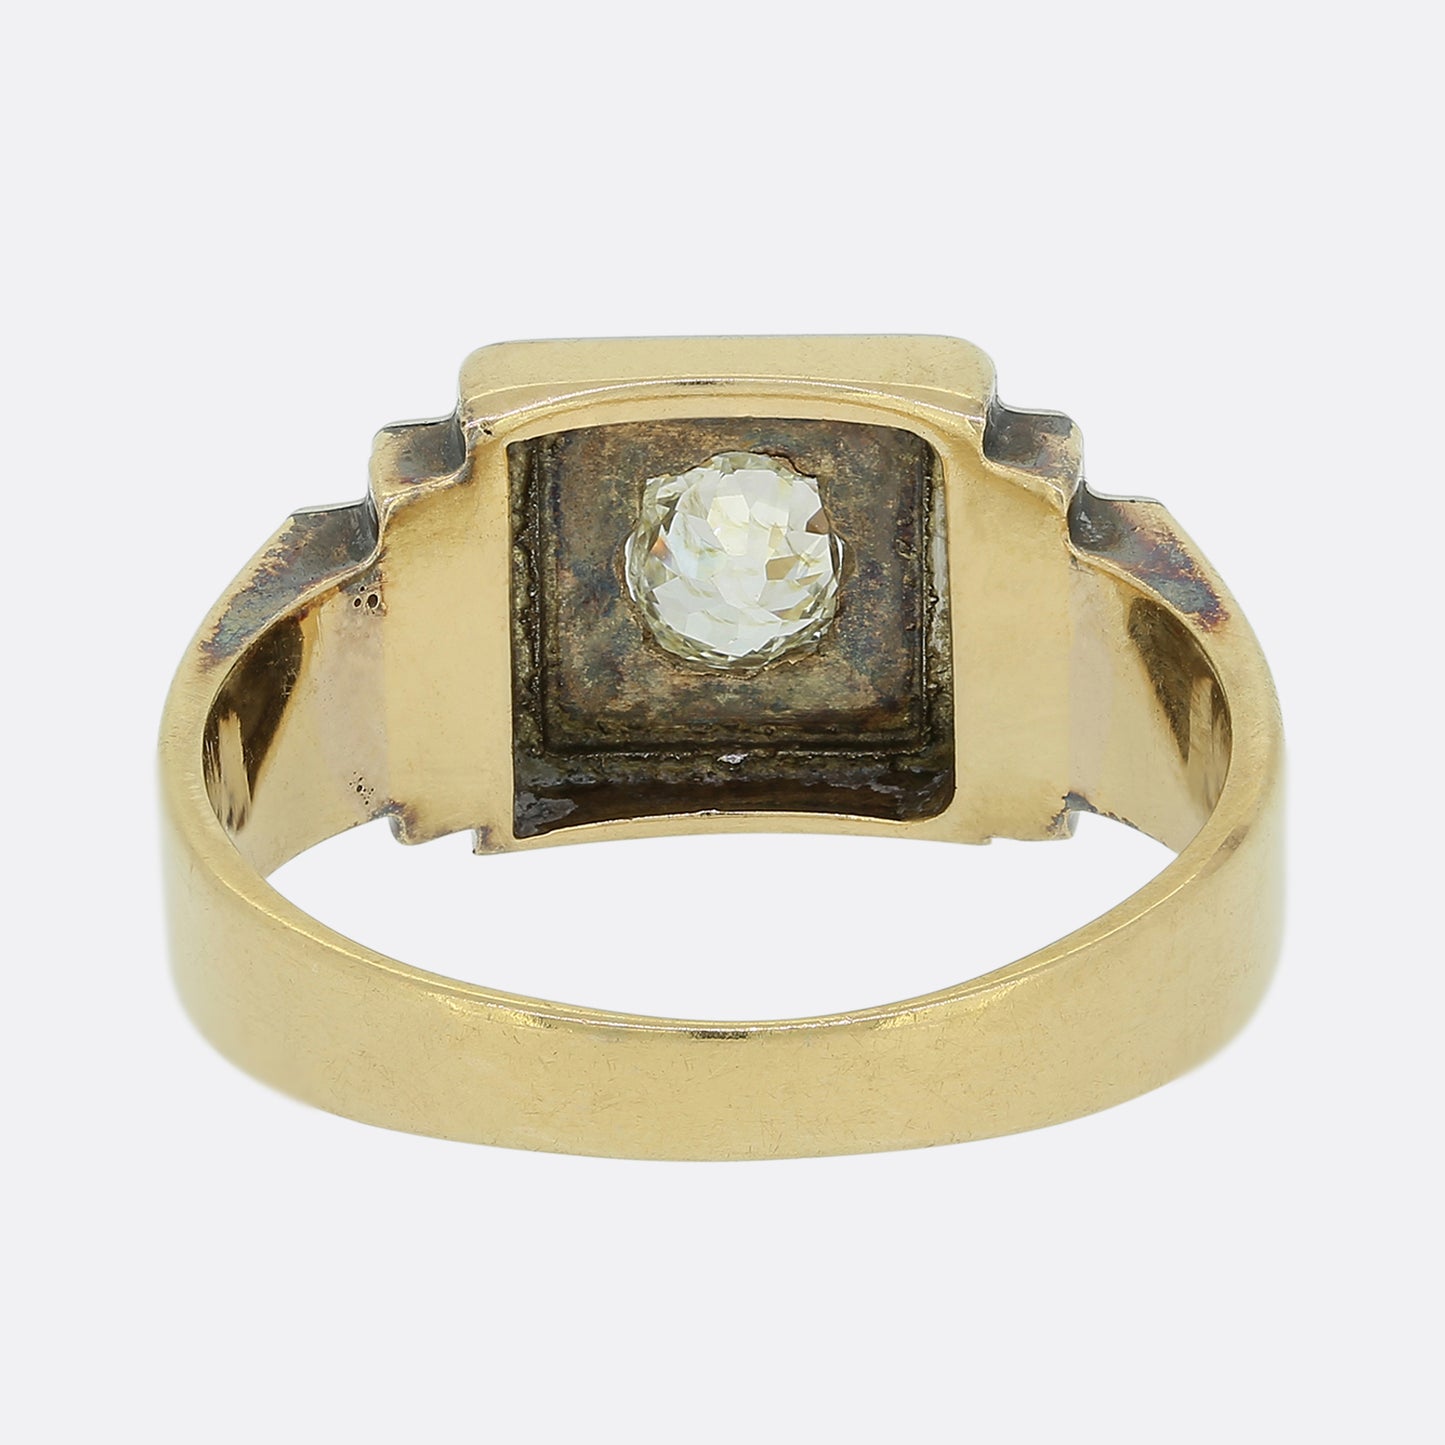 Edwardian Old Cut Diamond Stepped Ring